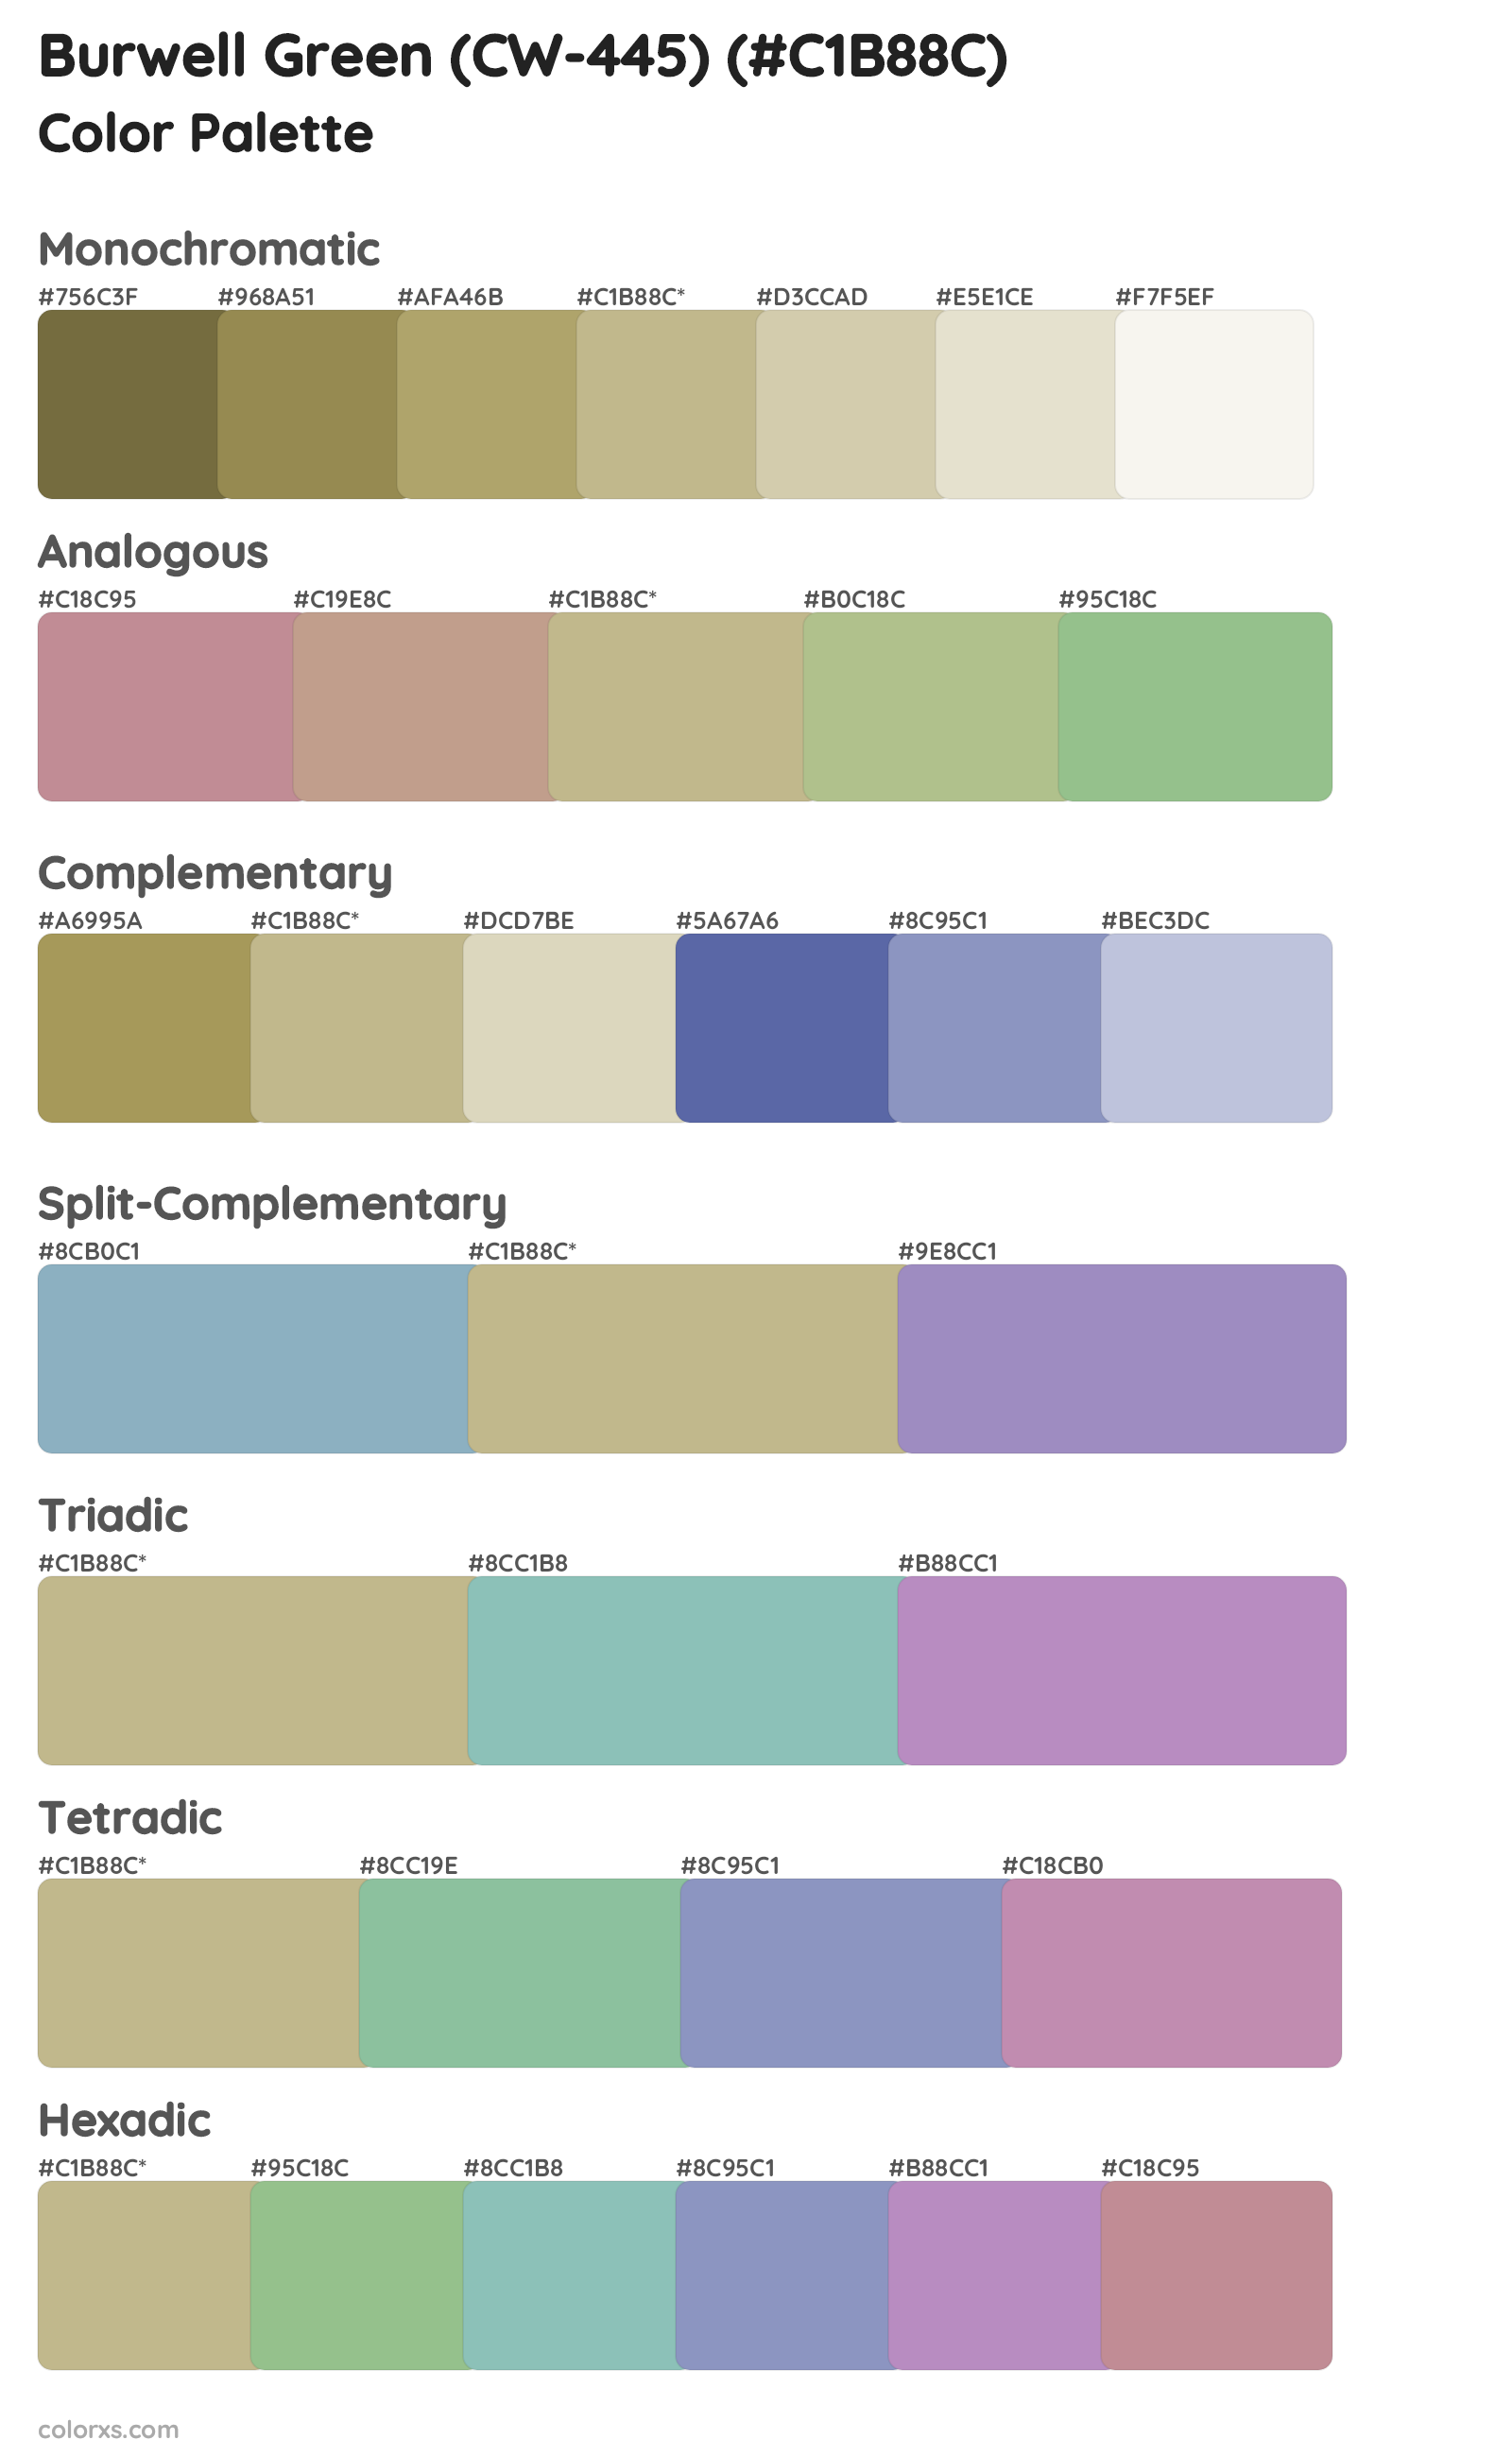 Burwell Green (CW-445) Color Scheme Palettes